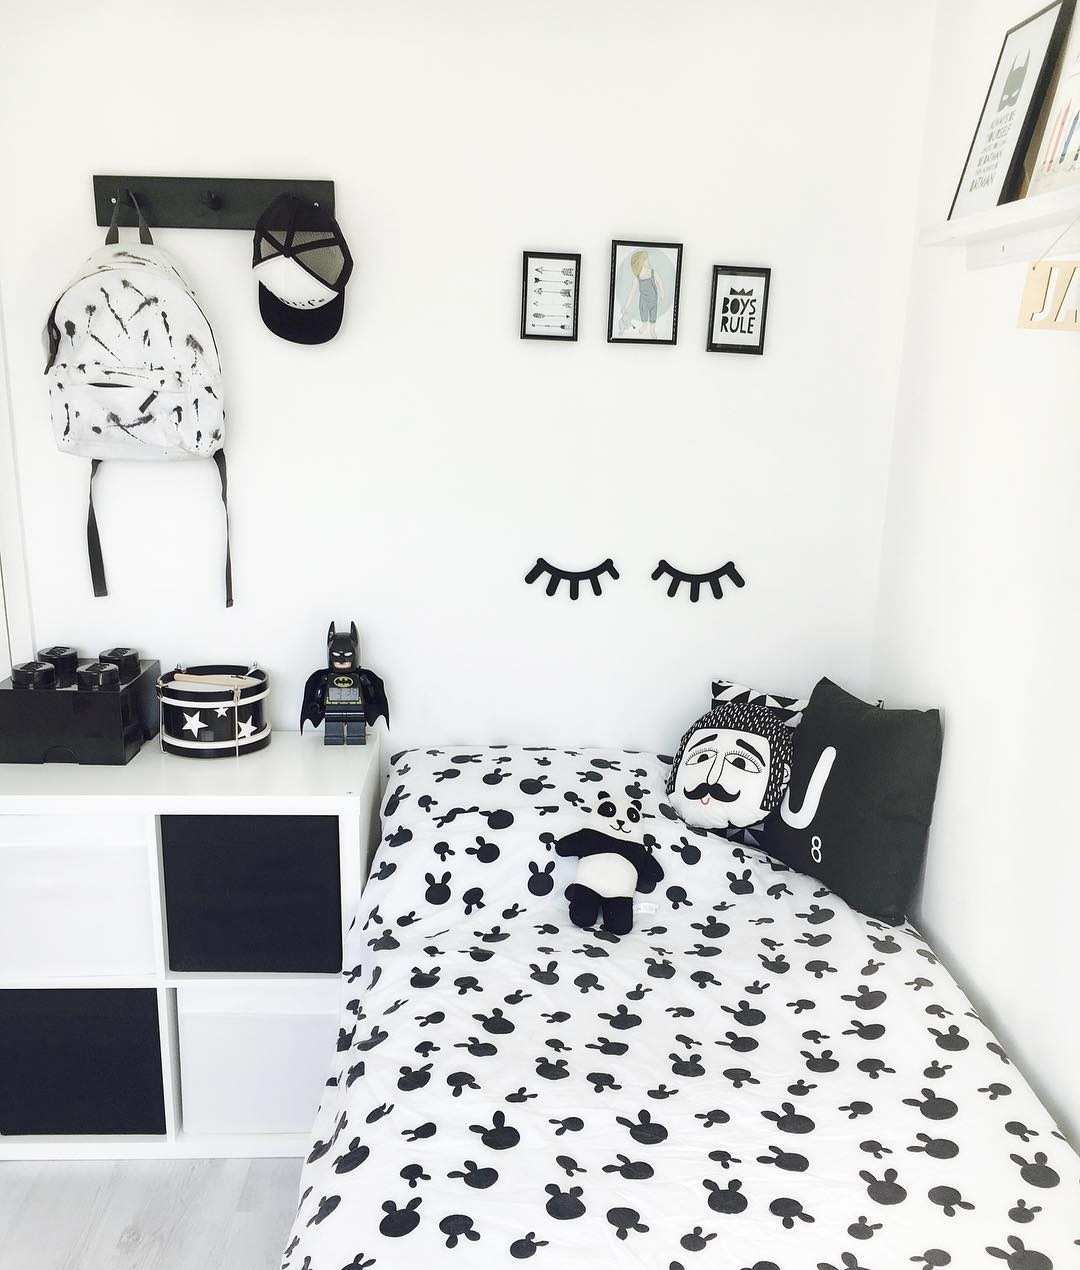 wallpaper dinding kamar hitam putih,white,black and white,black,monochrome photography,bedroom